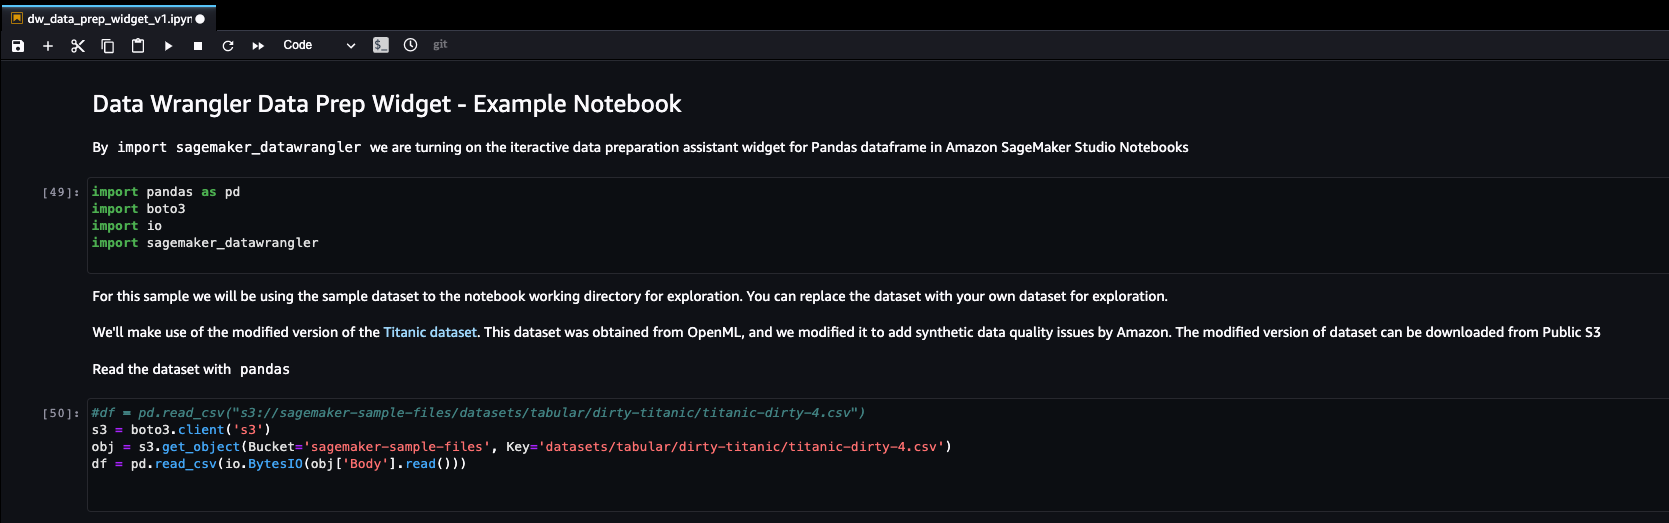 data wrangler data prep widget - example notebook